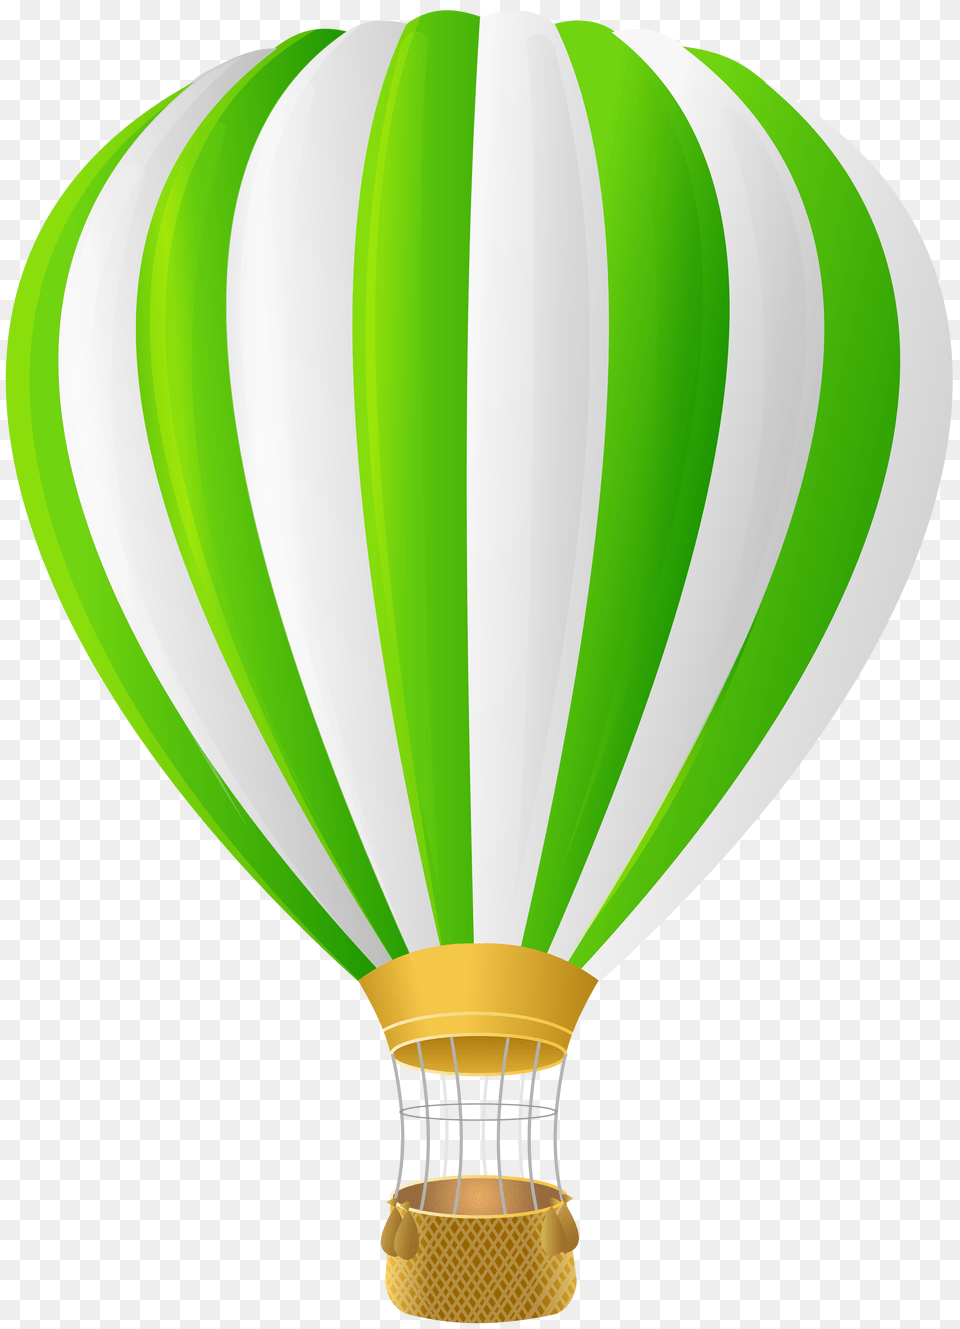 Green Hot Air Balloon Clip Gallery, Aircraft, Transportation, Vehicle, Hot Air Balloon Free Transparent Png